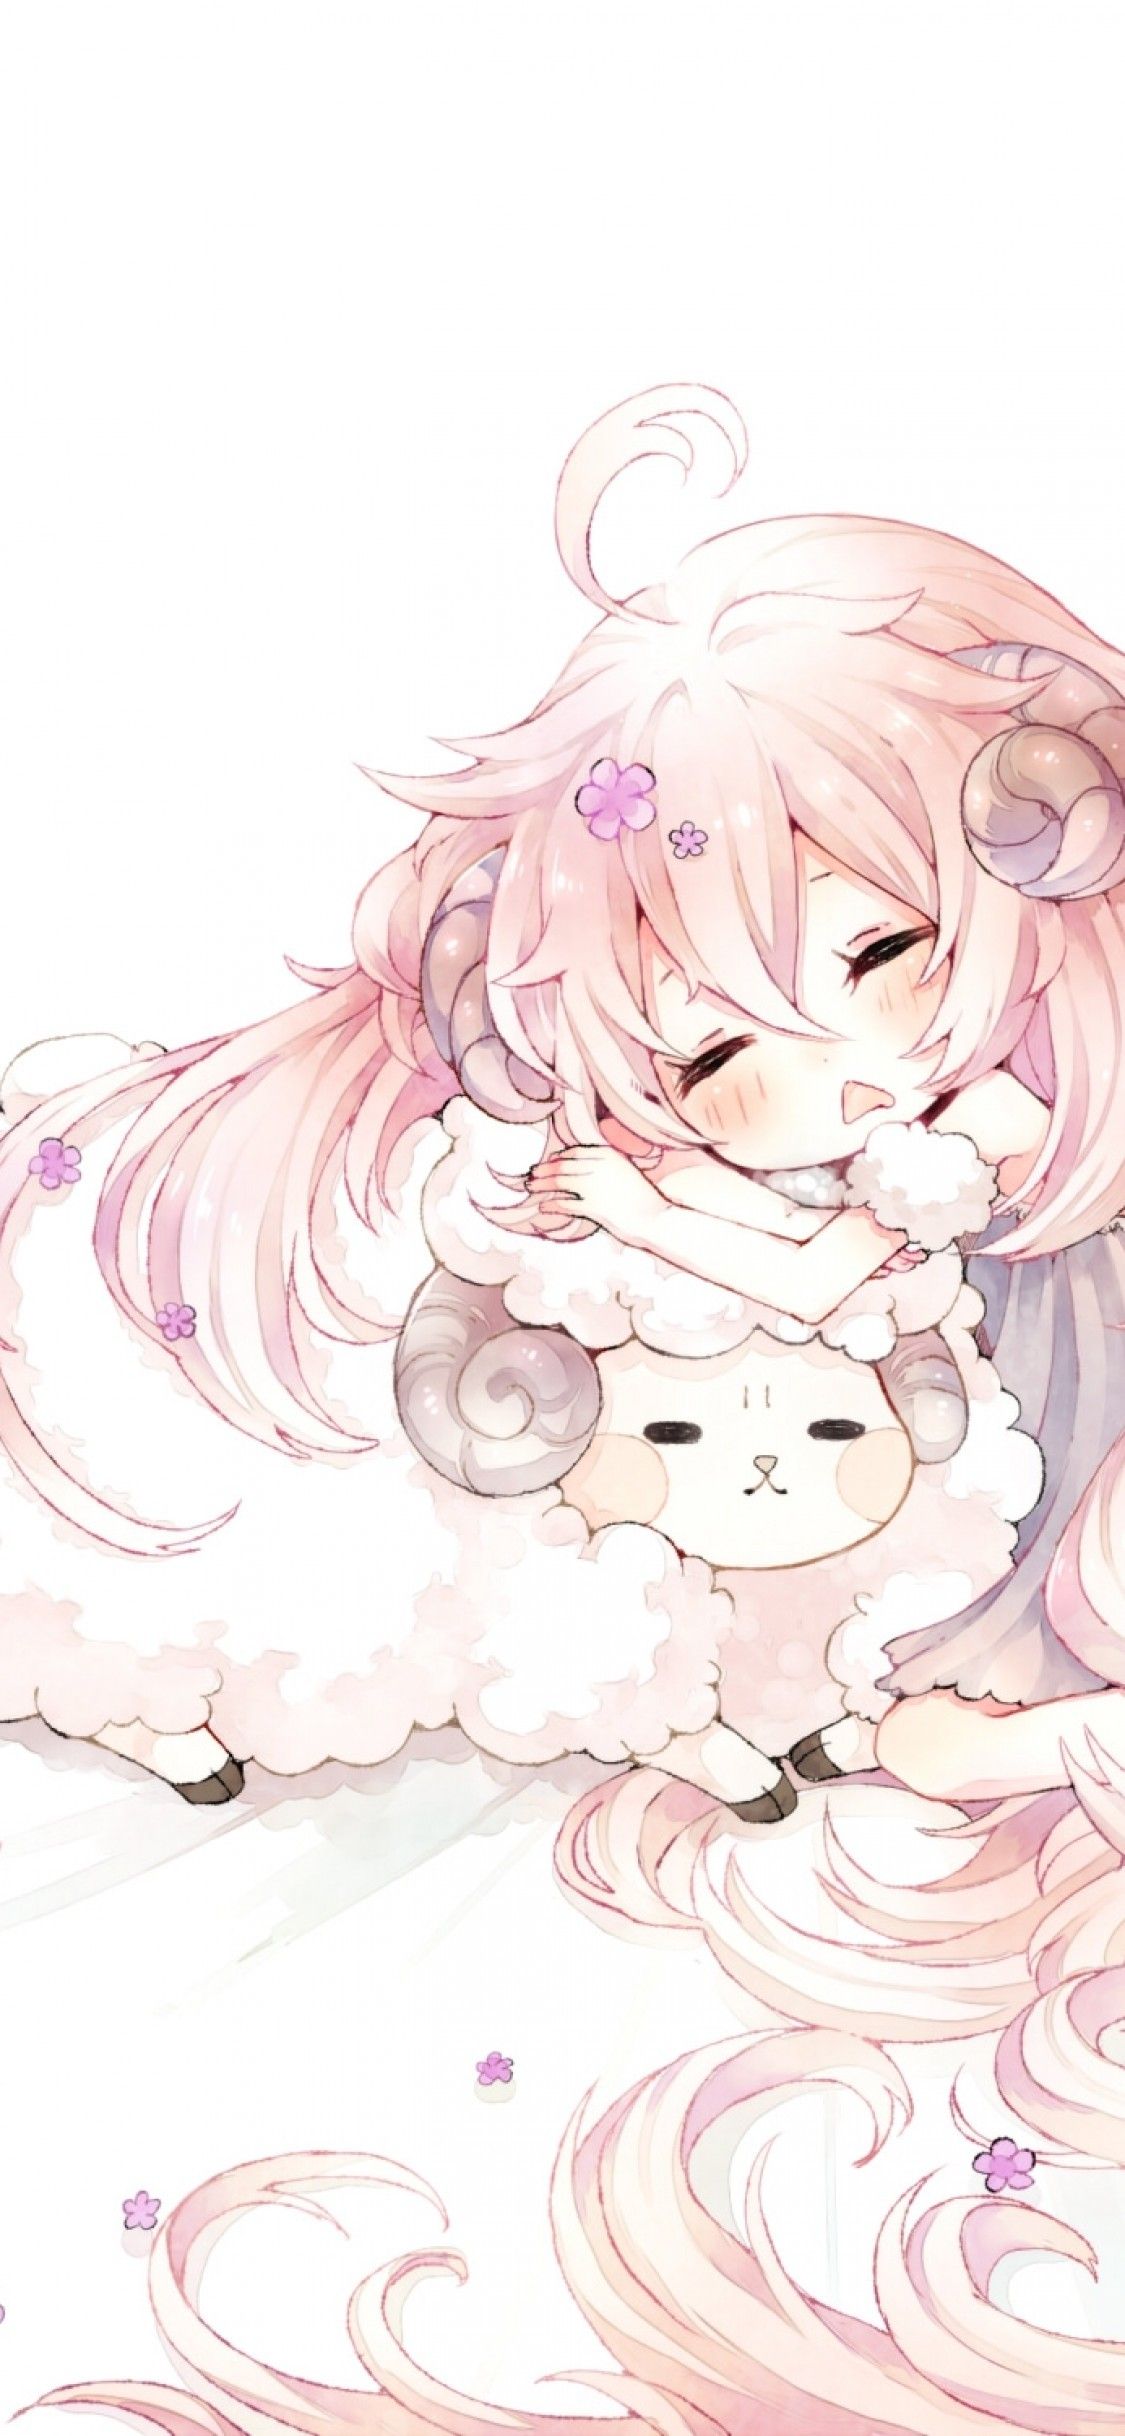 Download 1125x2436 Anime Girl, Chibi, Cute, Sleeping, Horns, Pink Hair Wallpaper for iPhone X